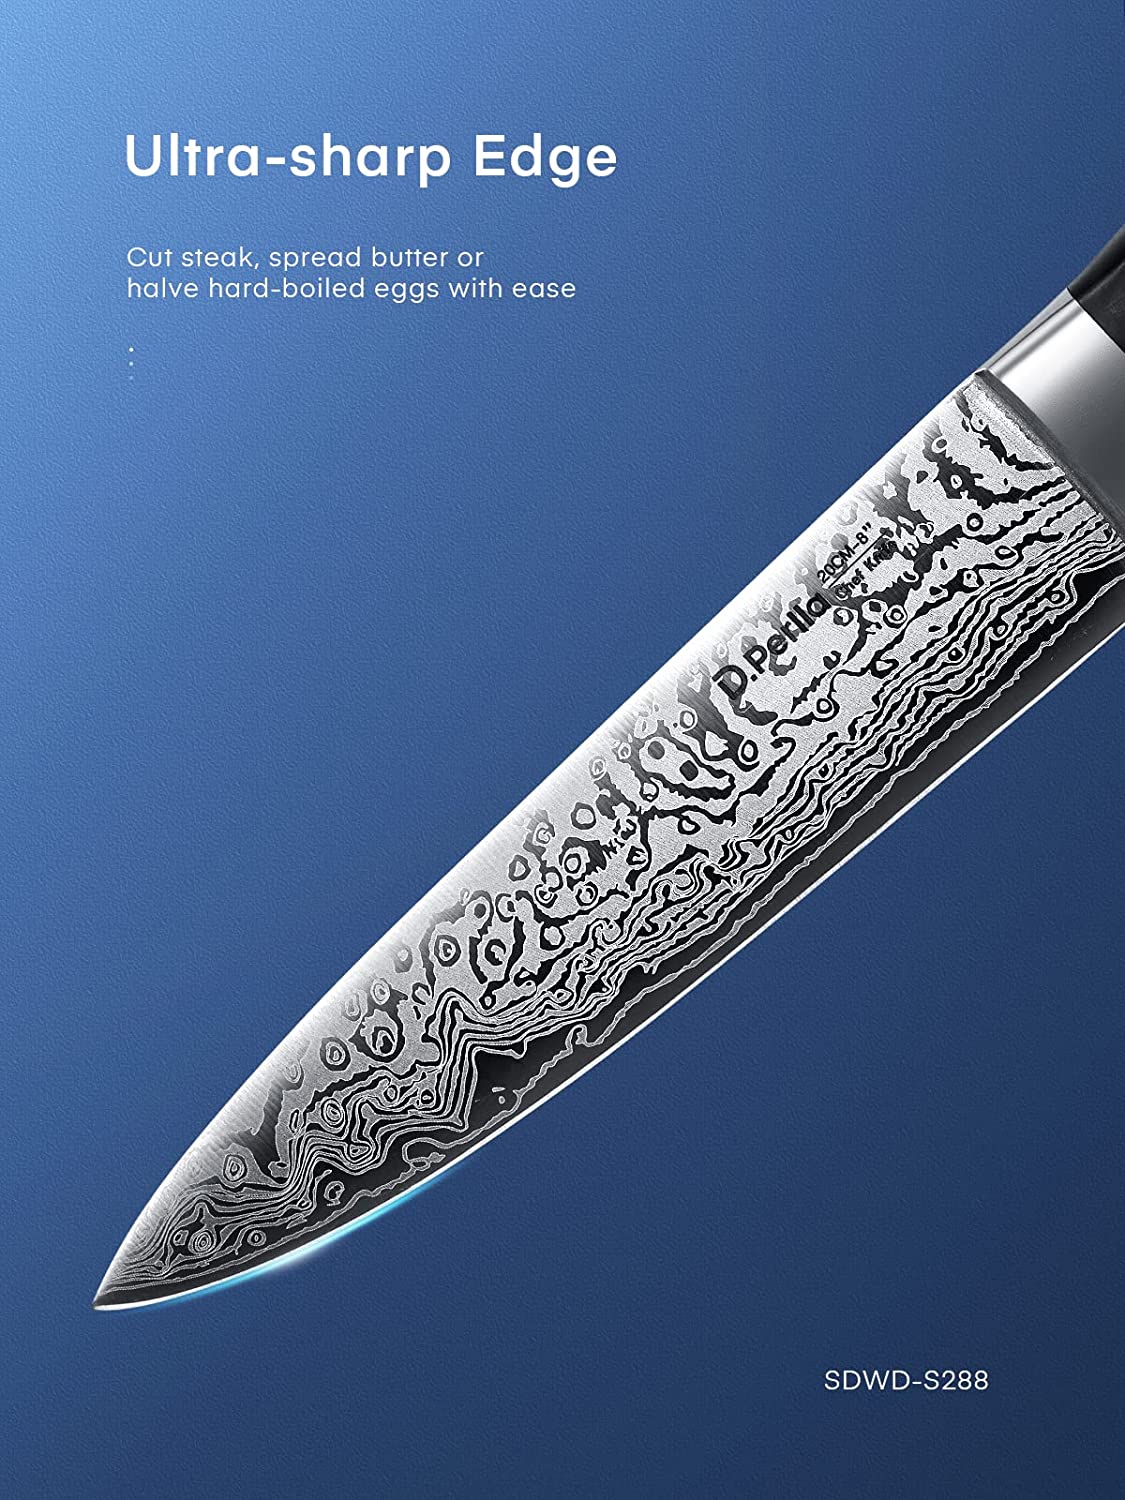 D.Perlla Knife Set, 14PCS German Stainless Steel Kitchen Knives Block Set with Built-in Sharpener, Black